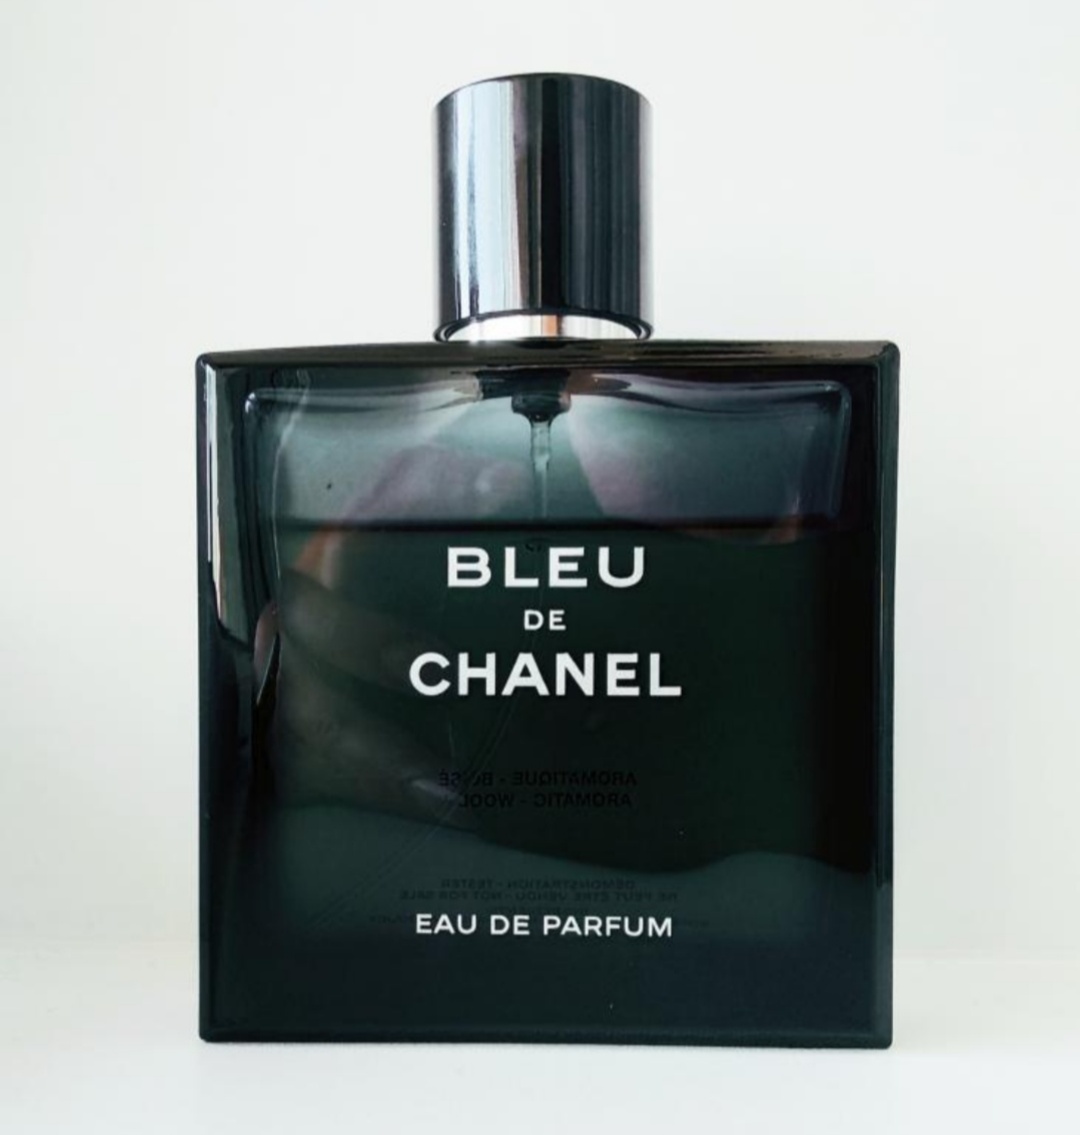 Bleu de chanel eau de. Chanel bleu EDP 100ml. Chanel Blue de Chanel Parfum. Chanel bleu EDP 100ml (m). Chanel bleu de Chanel туалетная вода 100 ml.